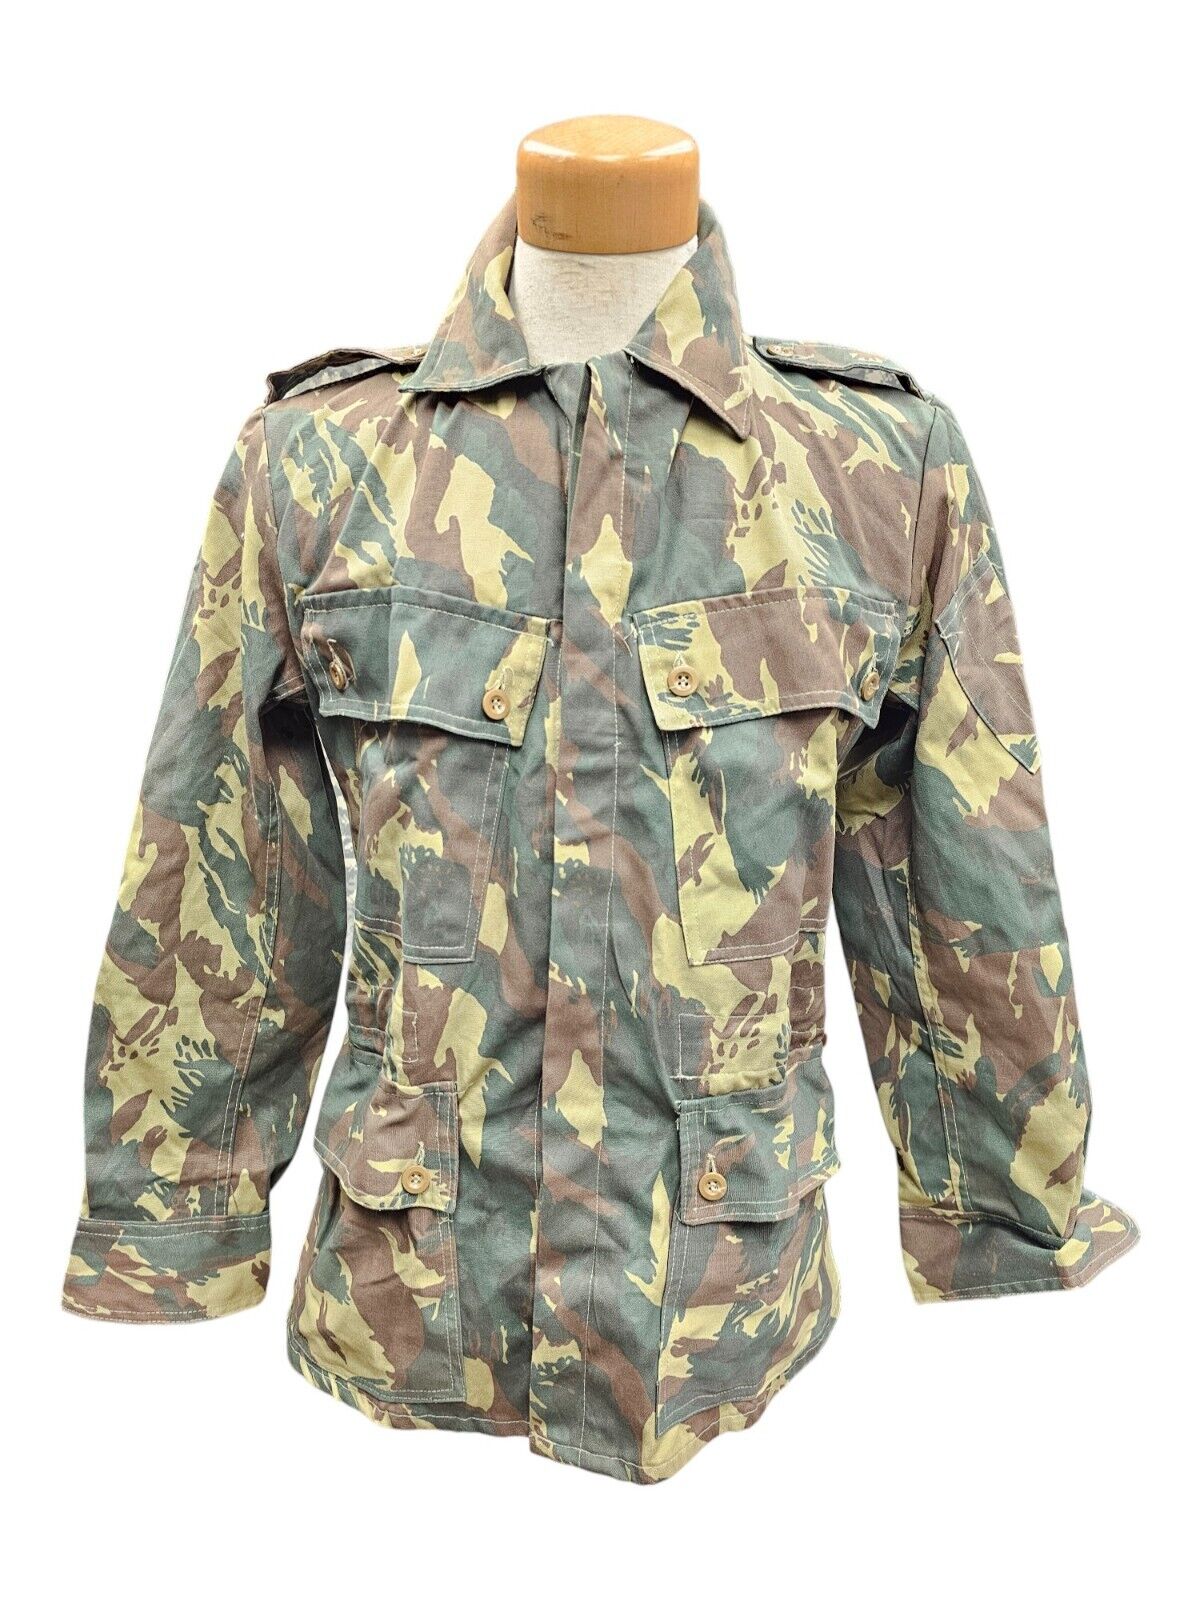 South African Transkei Bantustan Homeland Camouflage Shirt